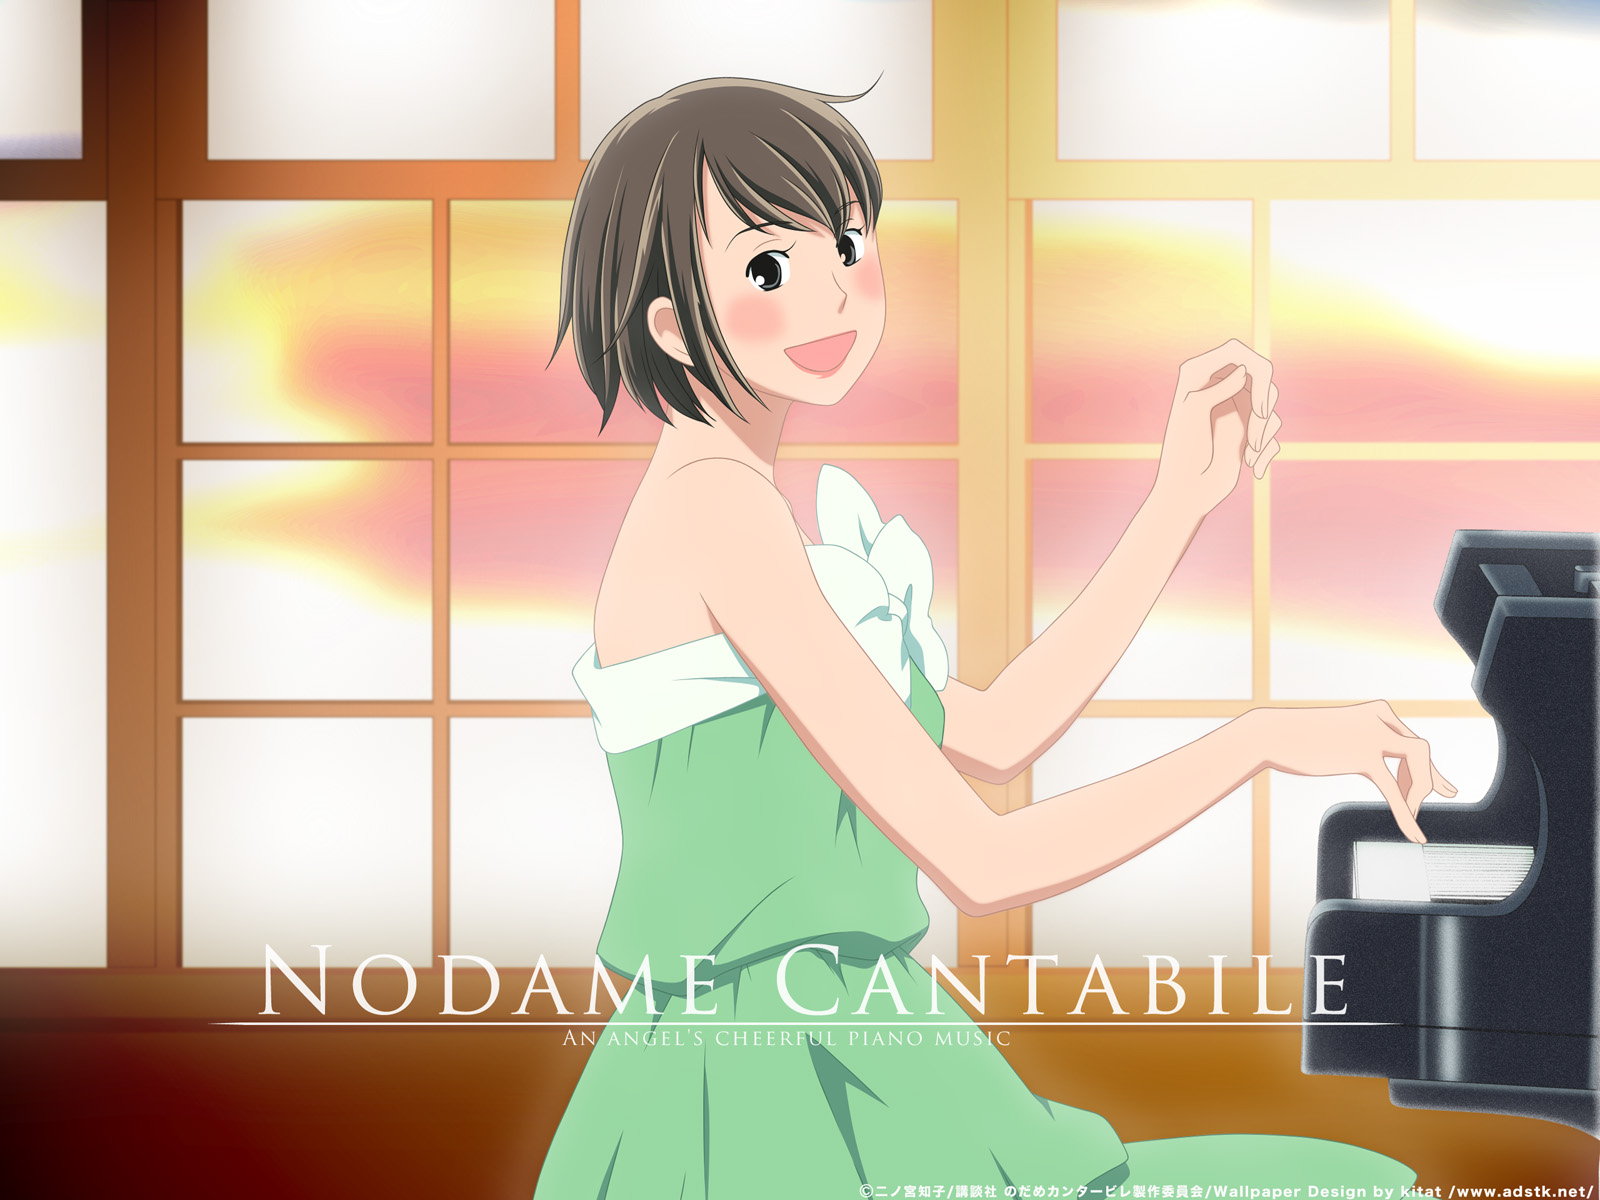 Amazing Noda Megumi Pictures & Backgrounds